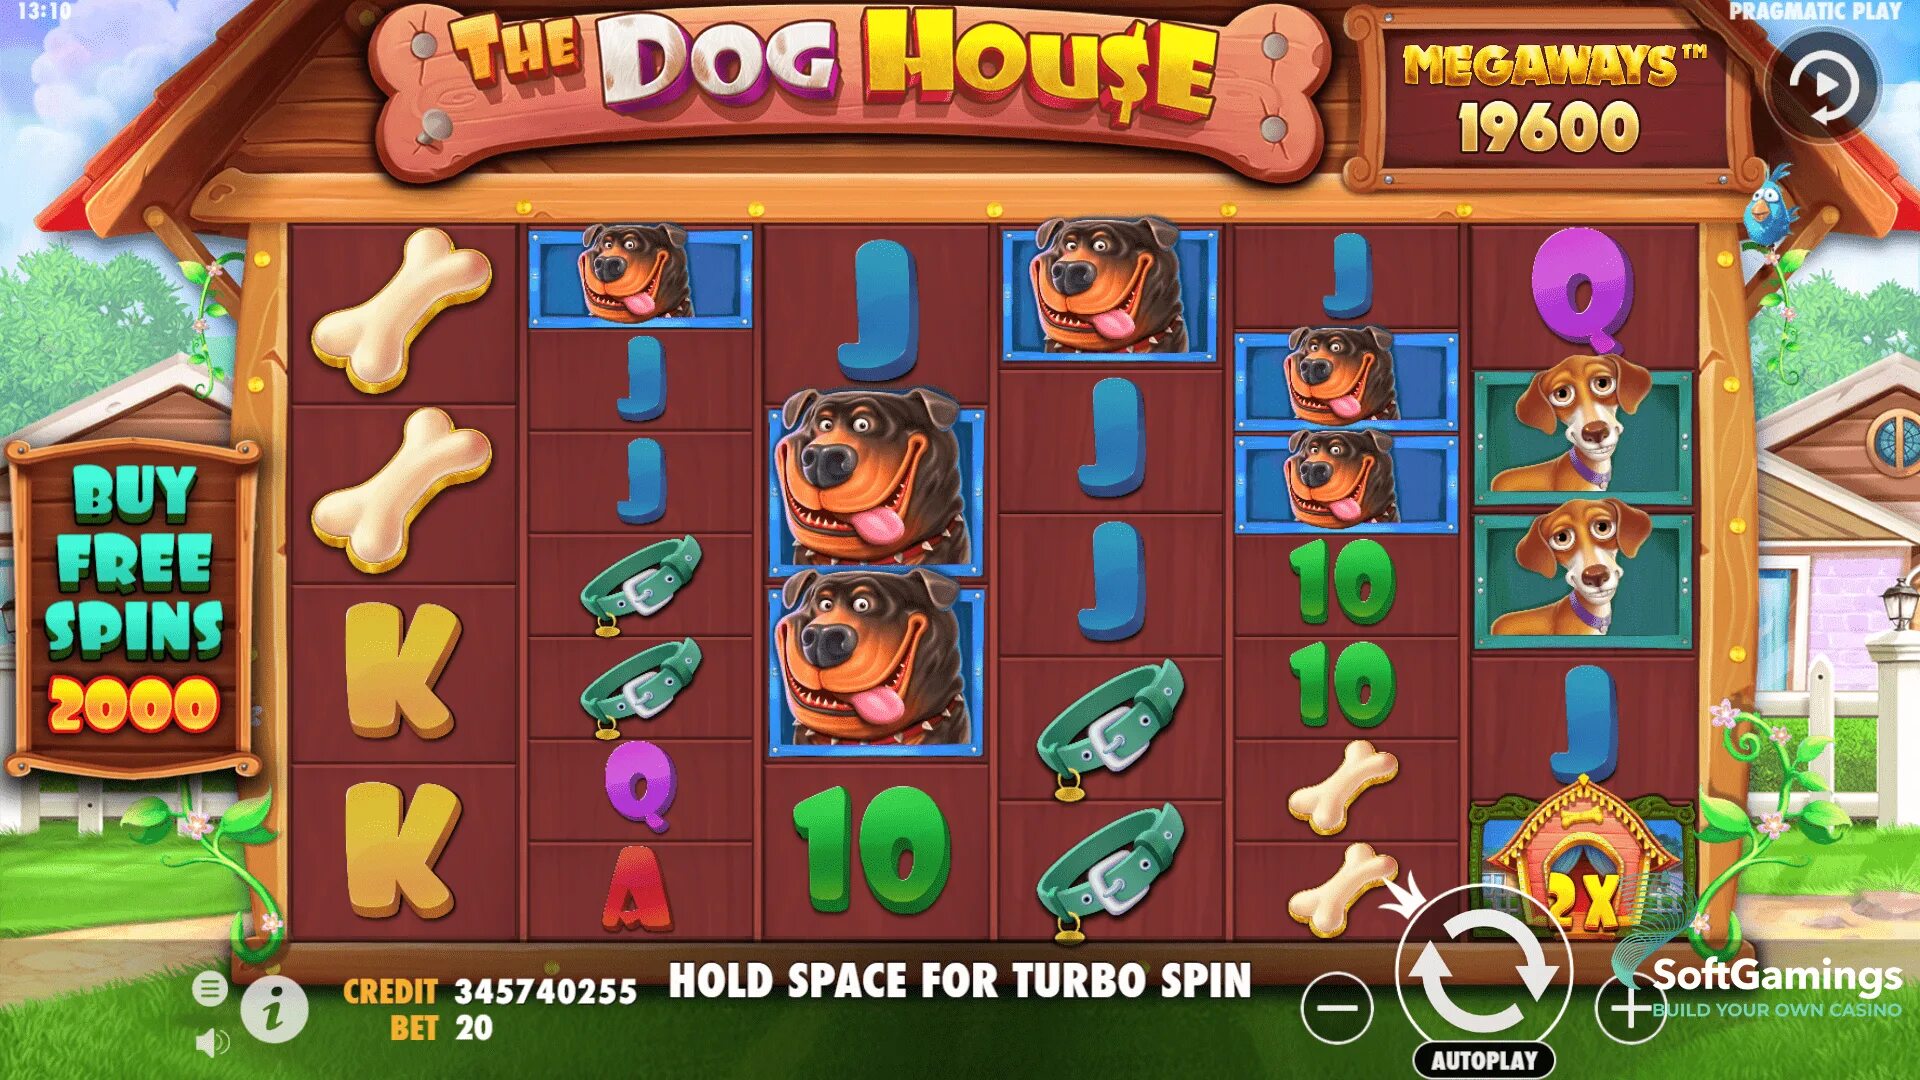 Dog House игра. Дог Хаус слот. Слот Dog House megaways. The Dog House игровой автомат. Dog house слот doghouse